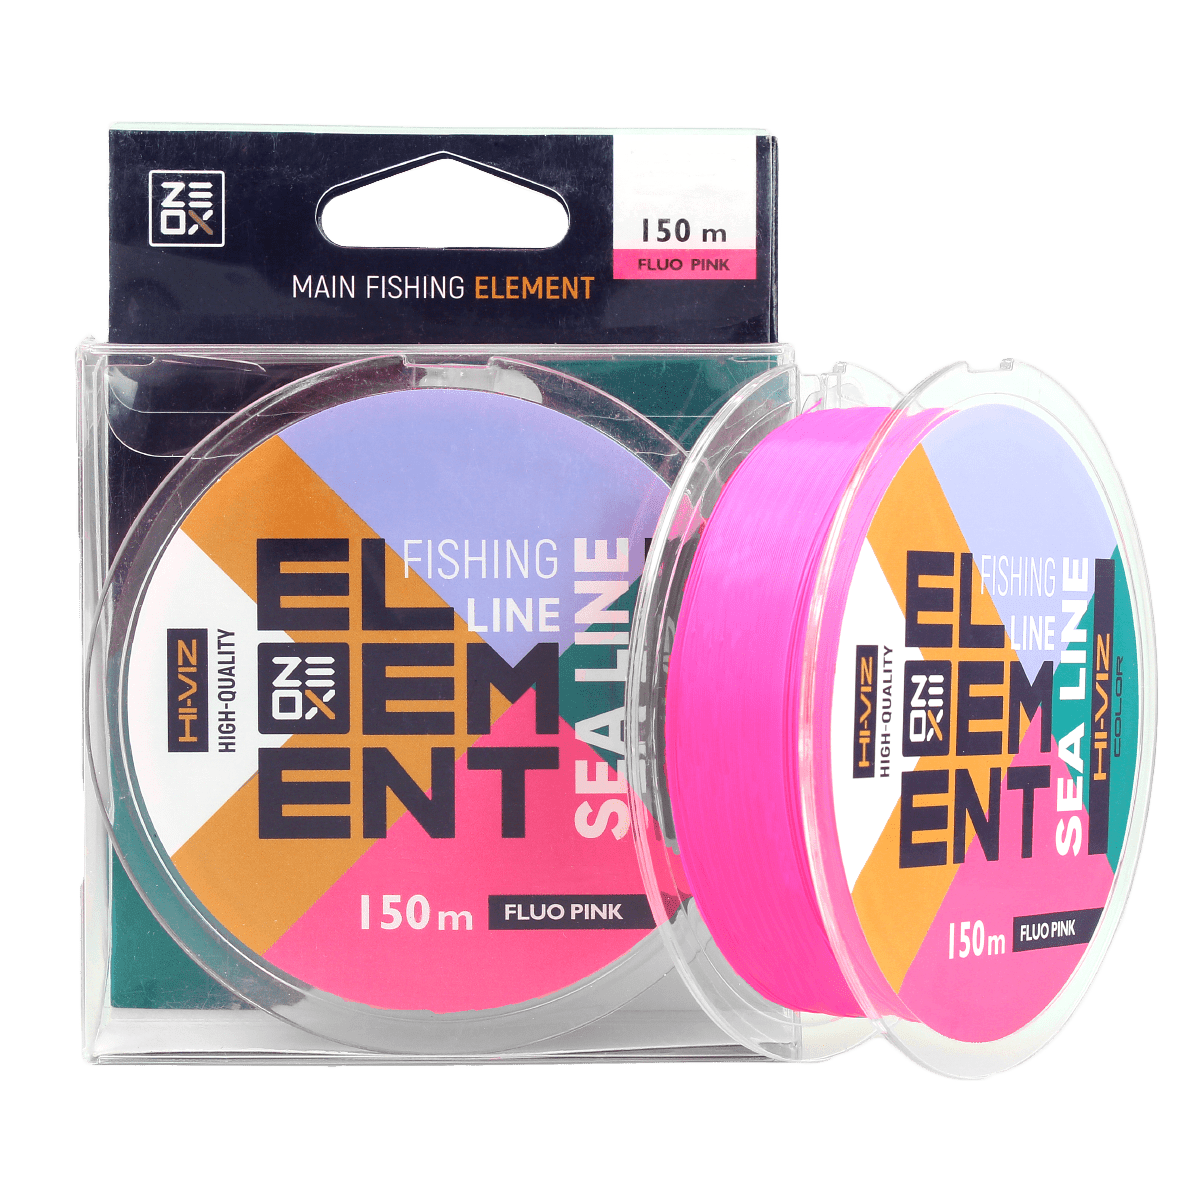 ZEOX Nylon Line Hi-Viz Element Sea 150m Fluo Pink